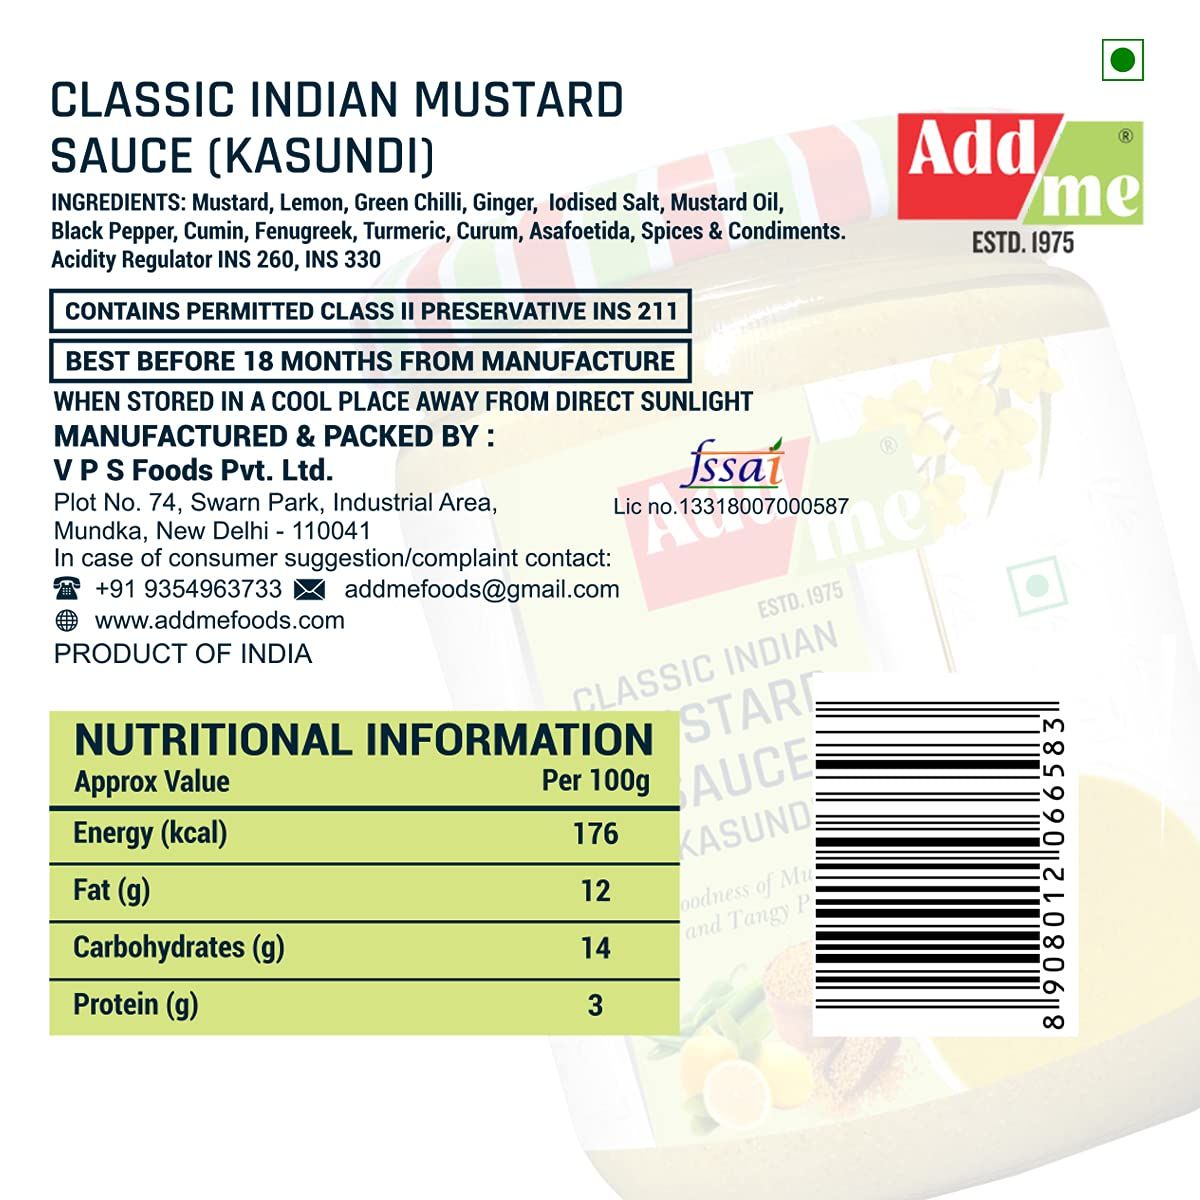 Add Me Classic Indian Mustard Sauce Chutney Bengal Kasundi Image